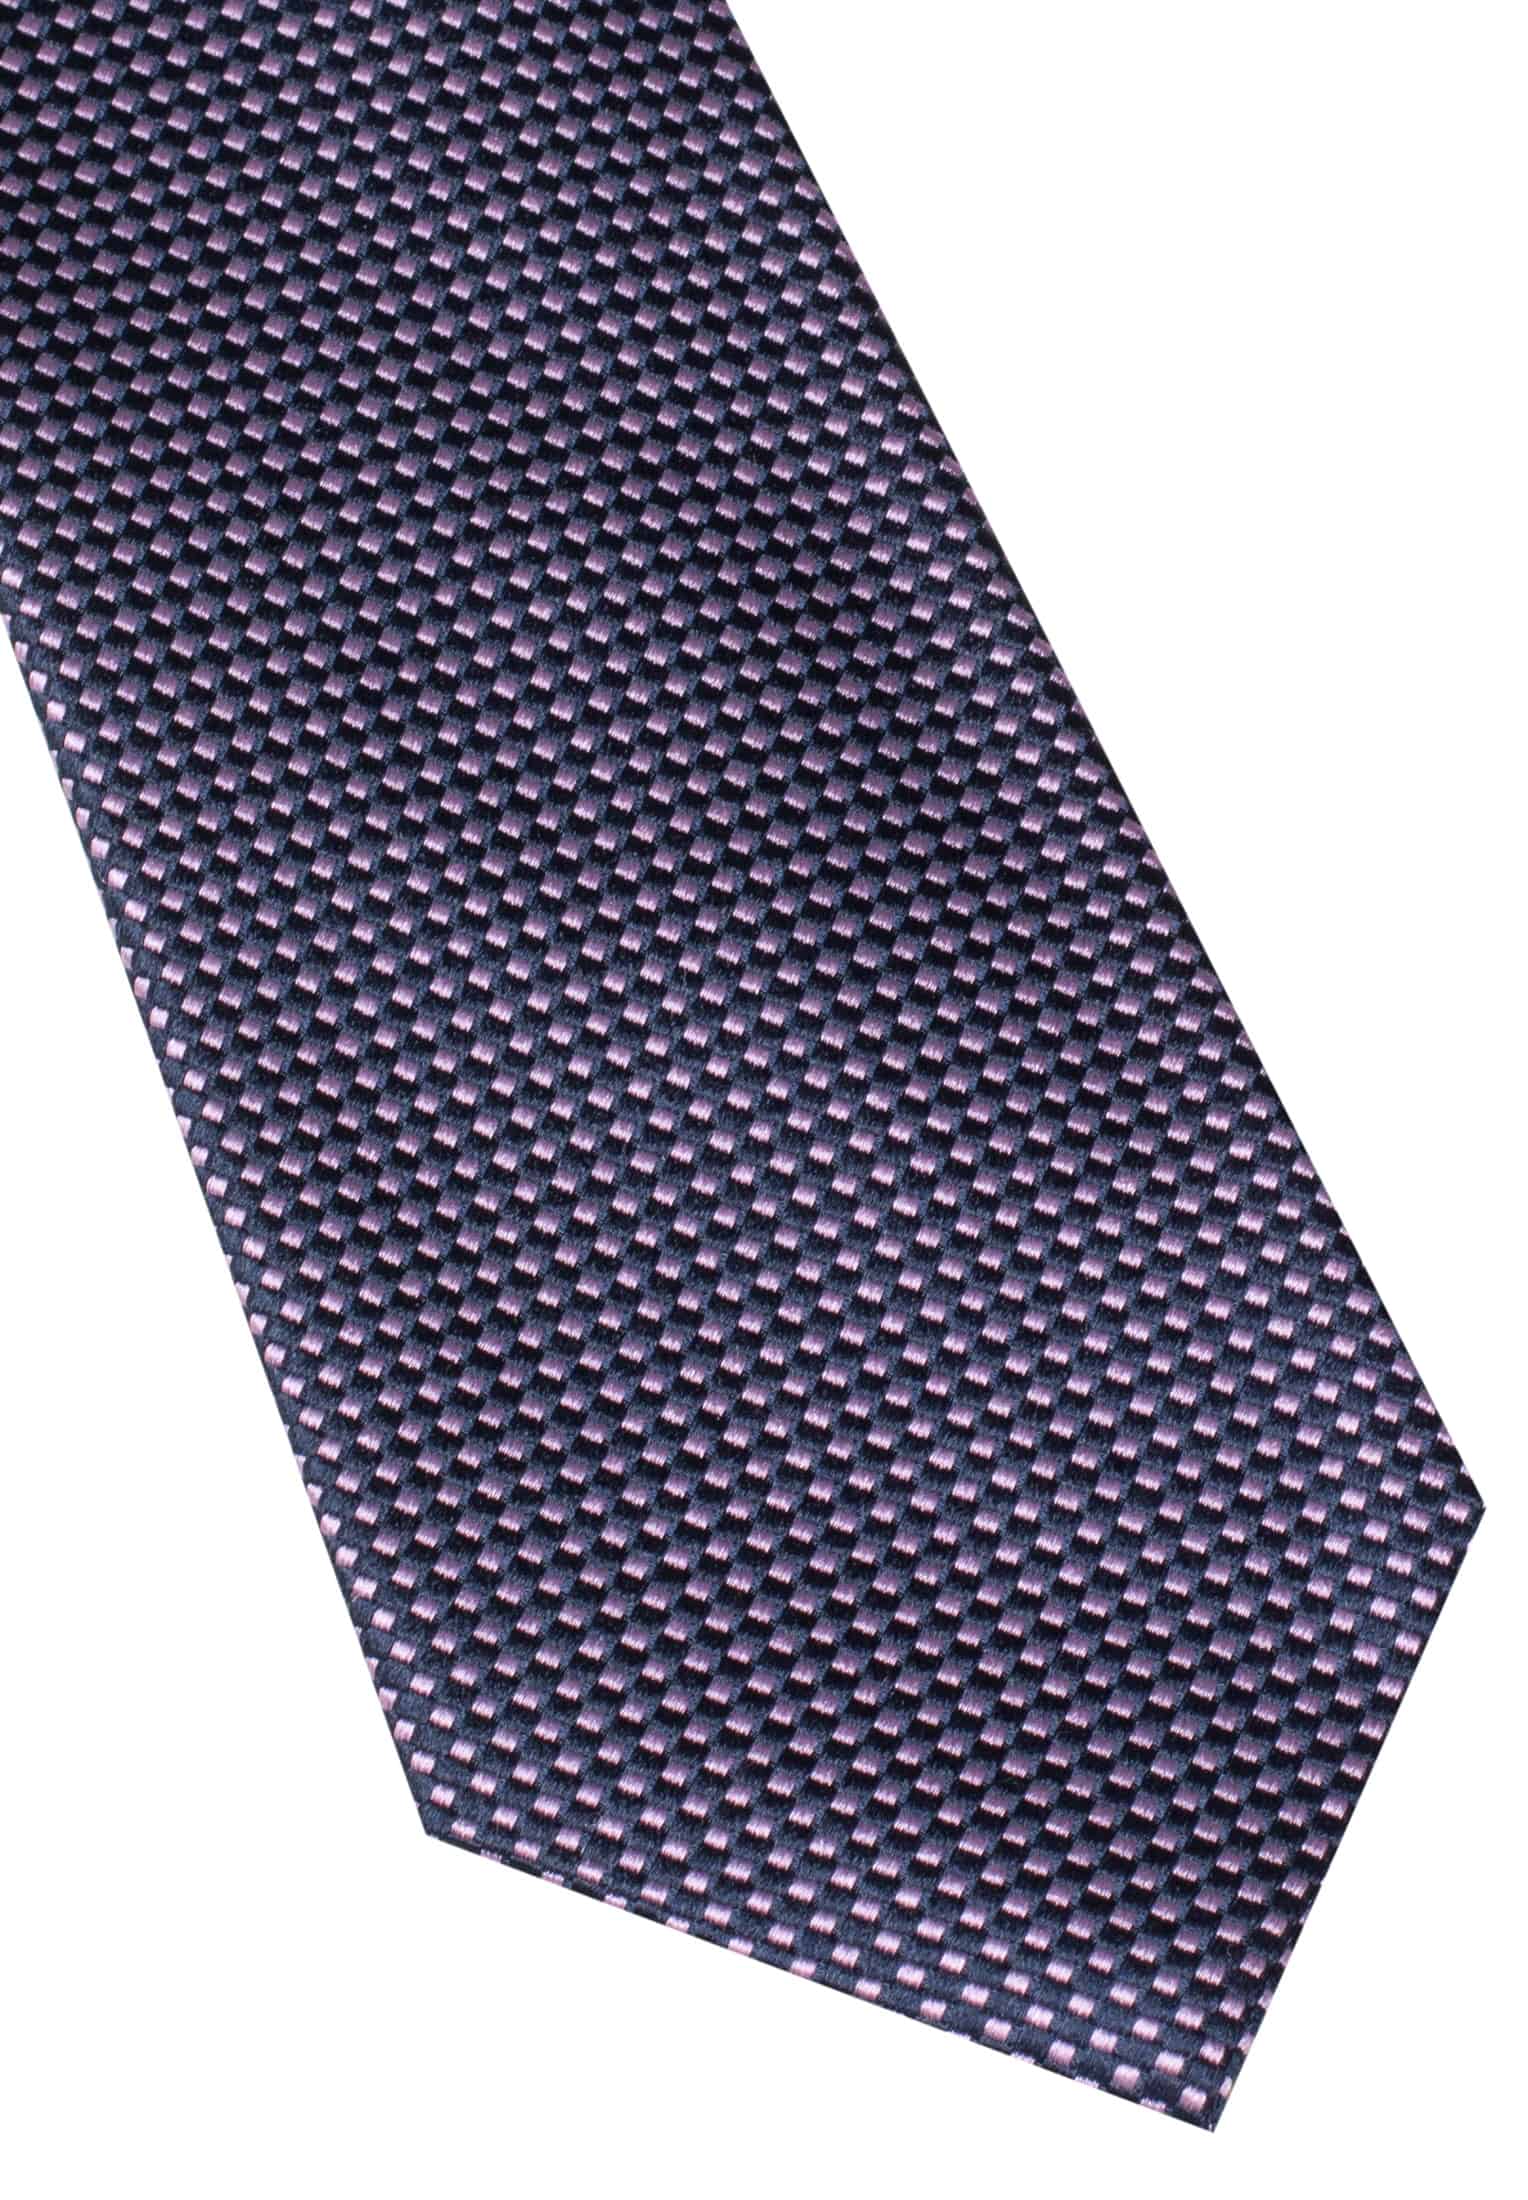 Krawatte in strukturiert | navy/rot 1AC00534-81-89-142 | | 142 navy/rot